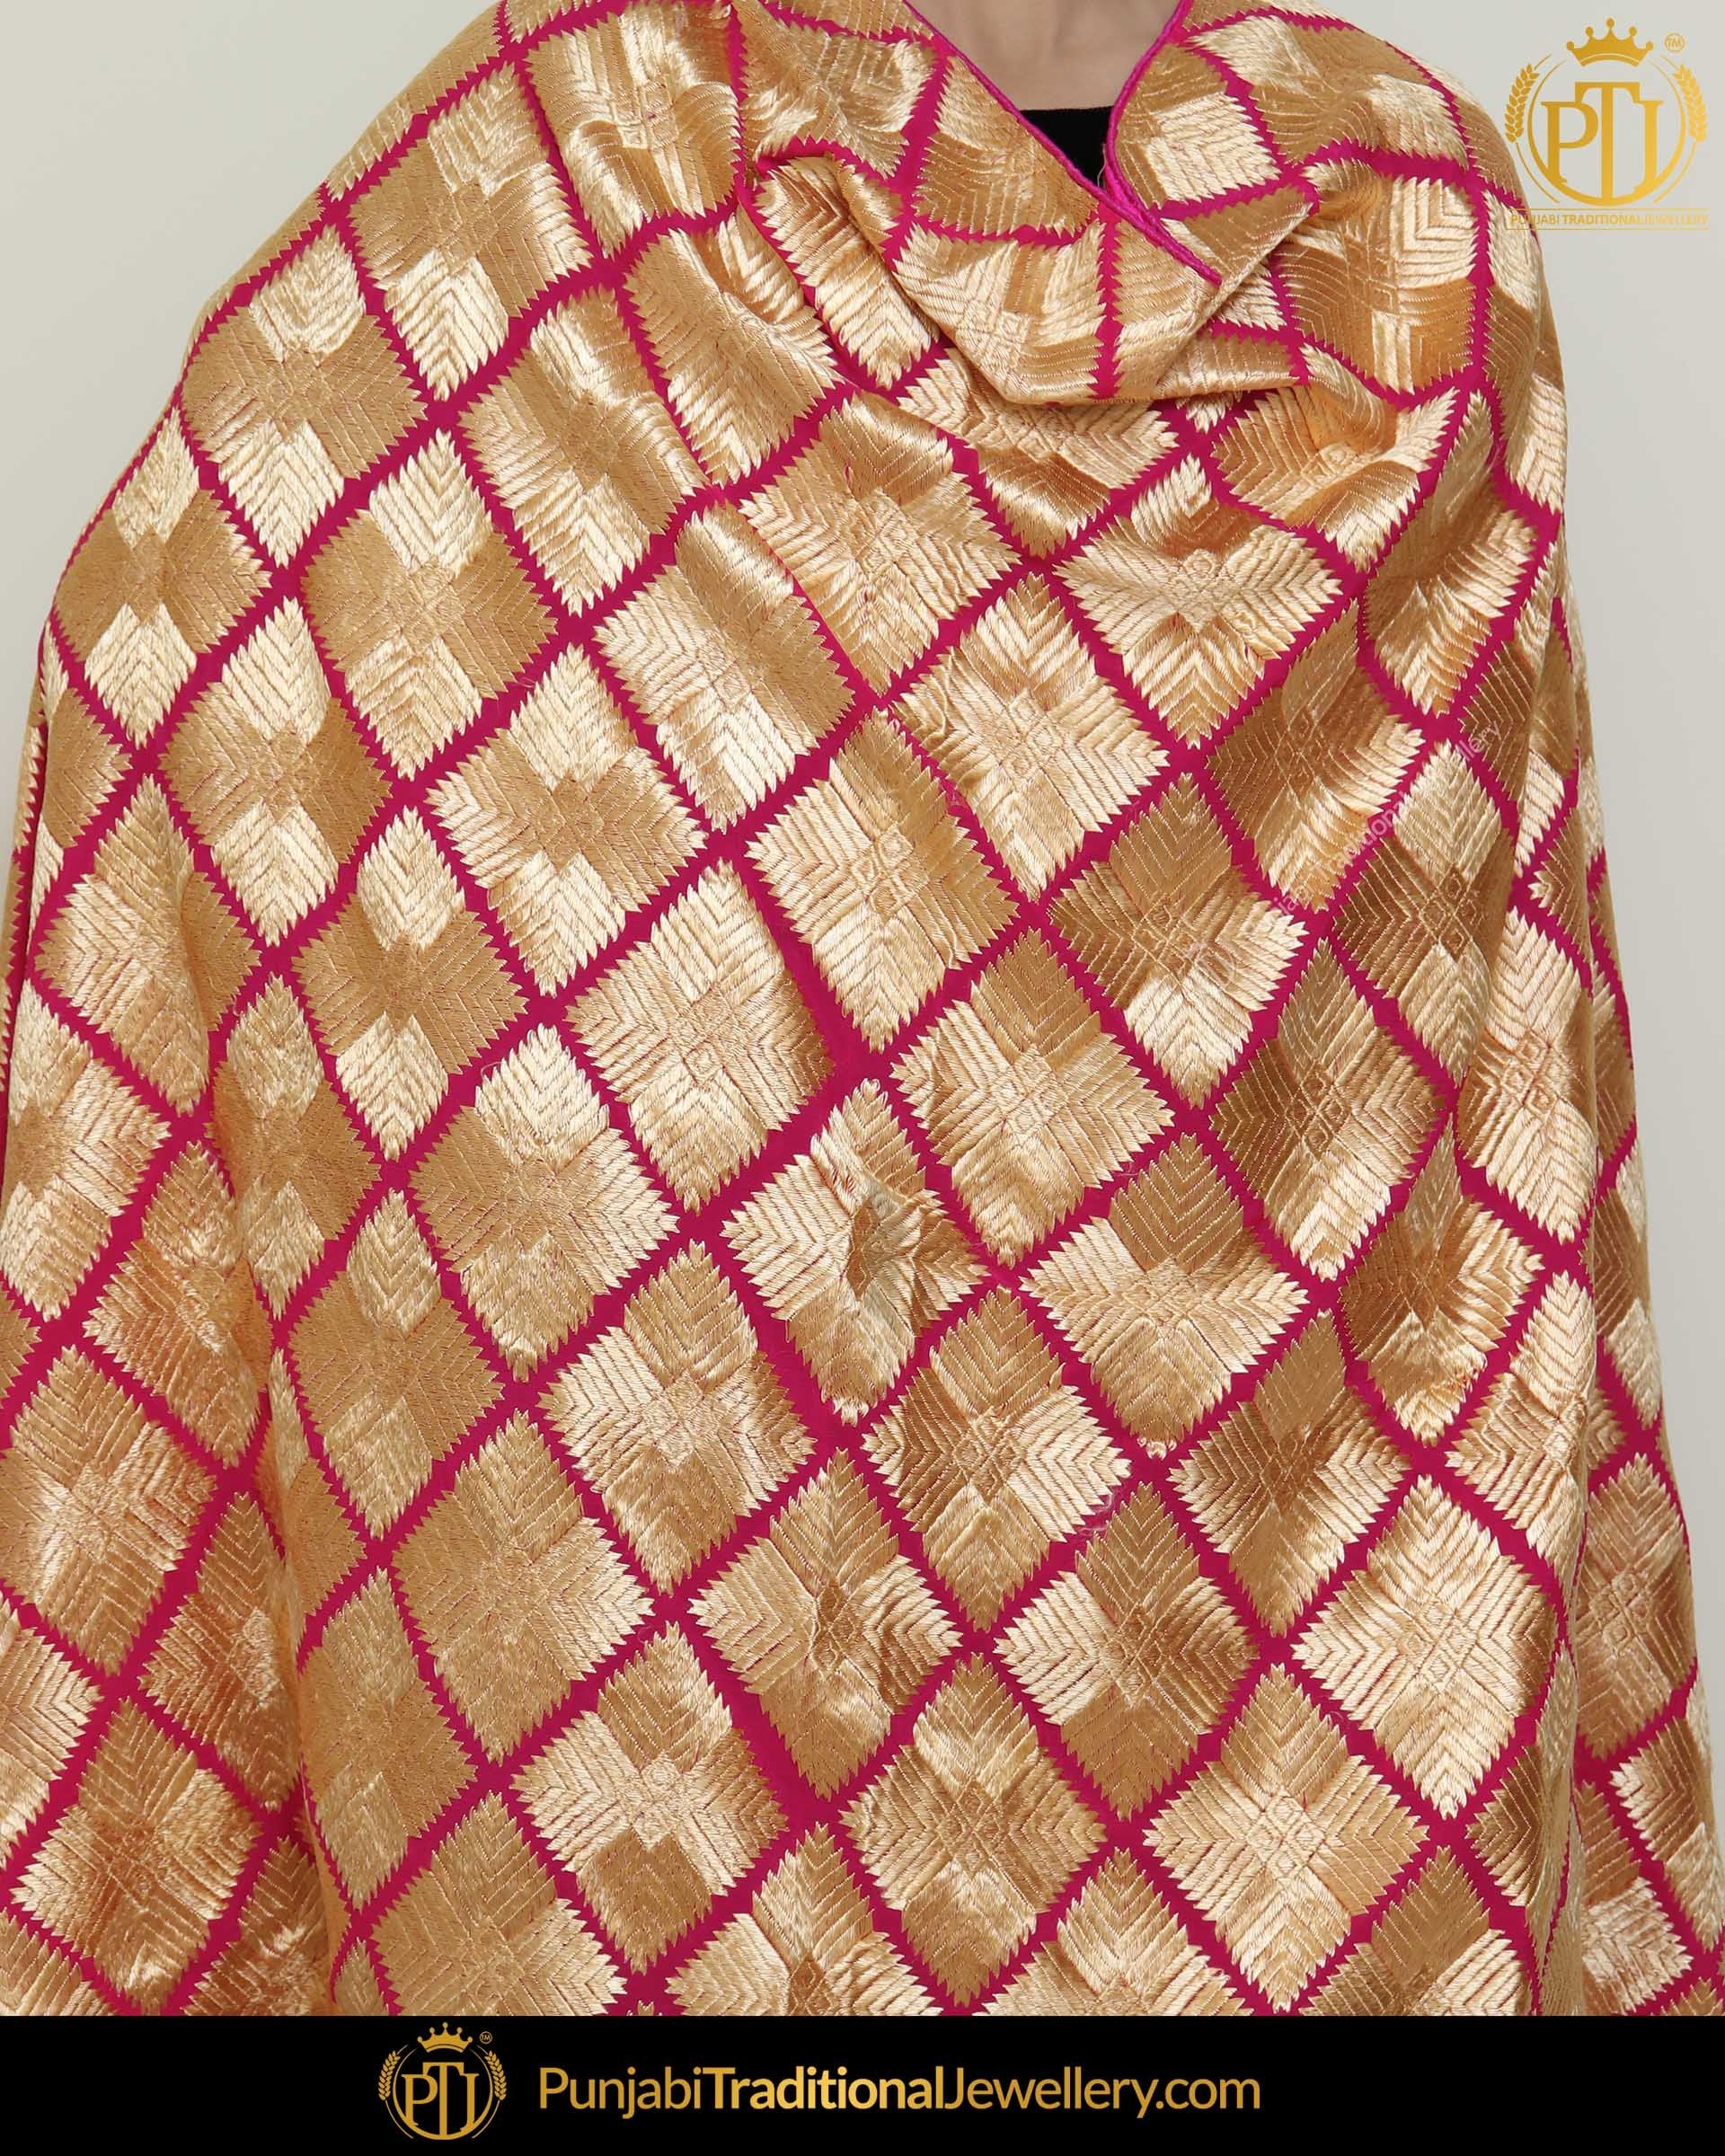 Golden & Pink Double Color Phulkari | Punjabi Traditional Jewellery Exclusive